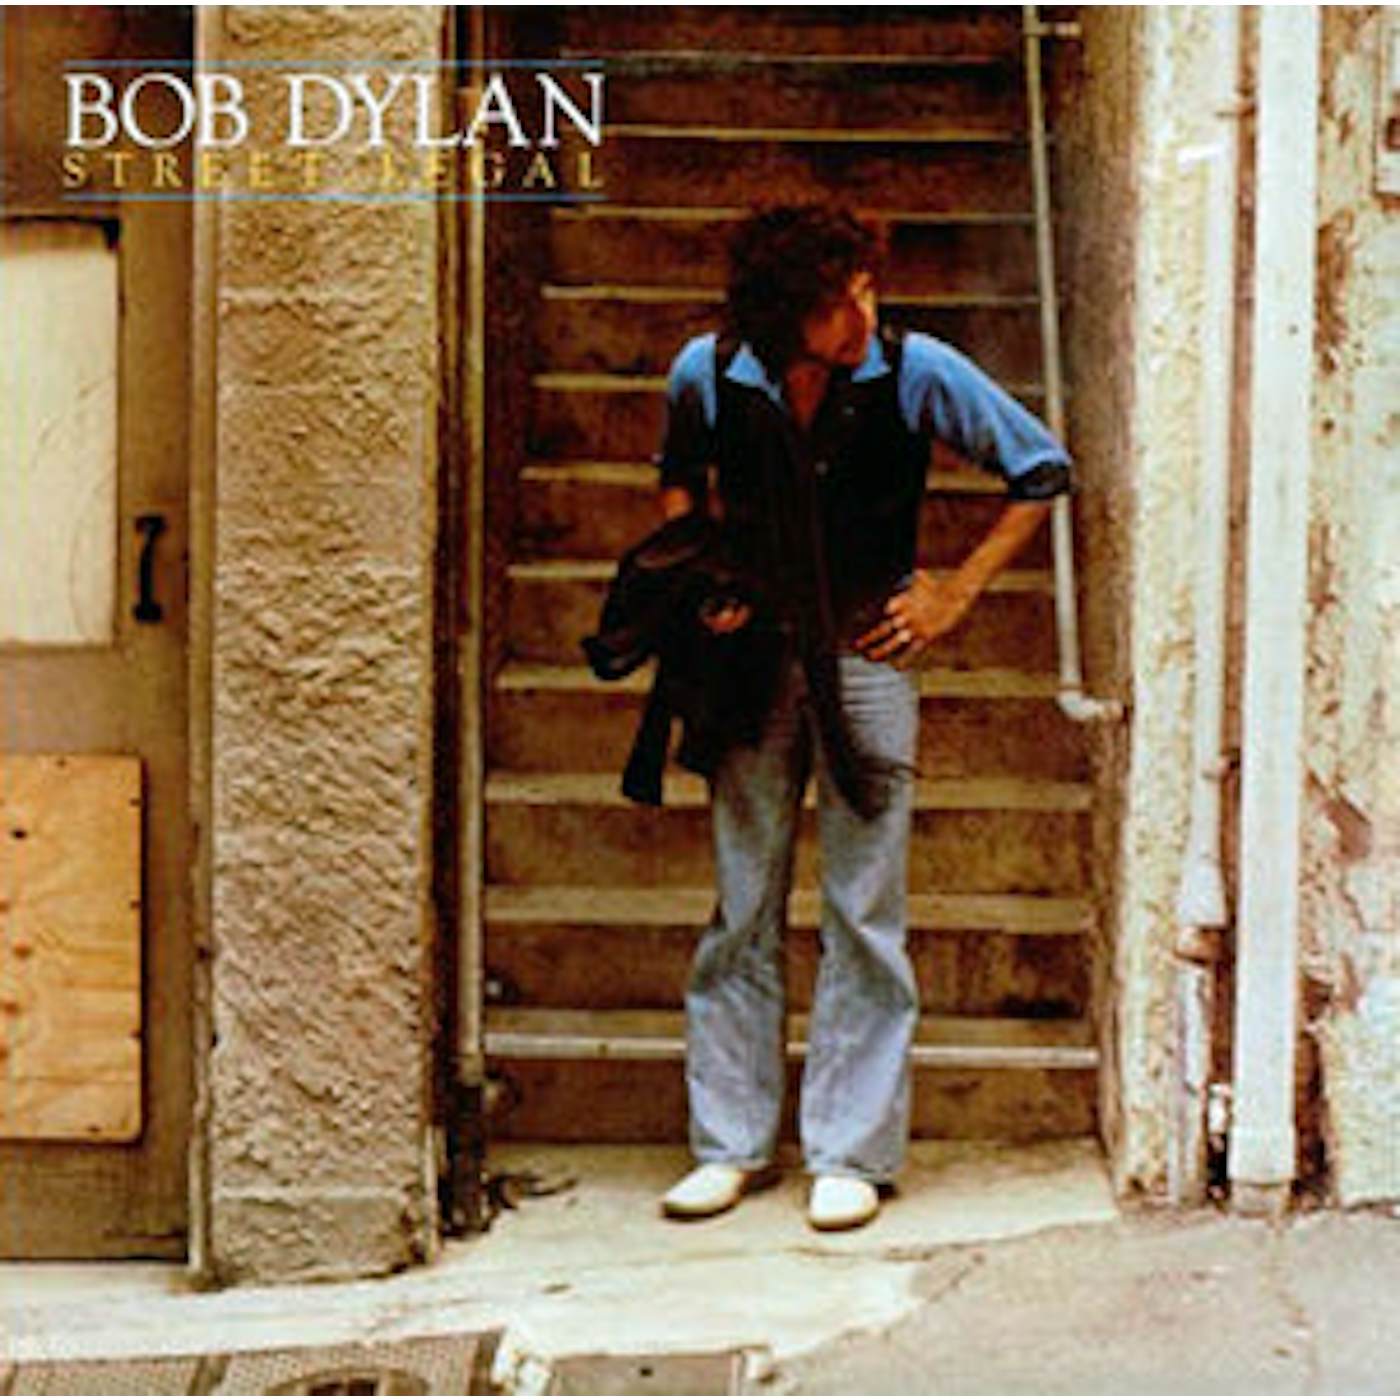 Bob Dylan LP Vinyl Record - Street Legal